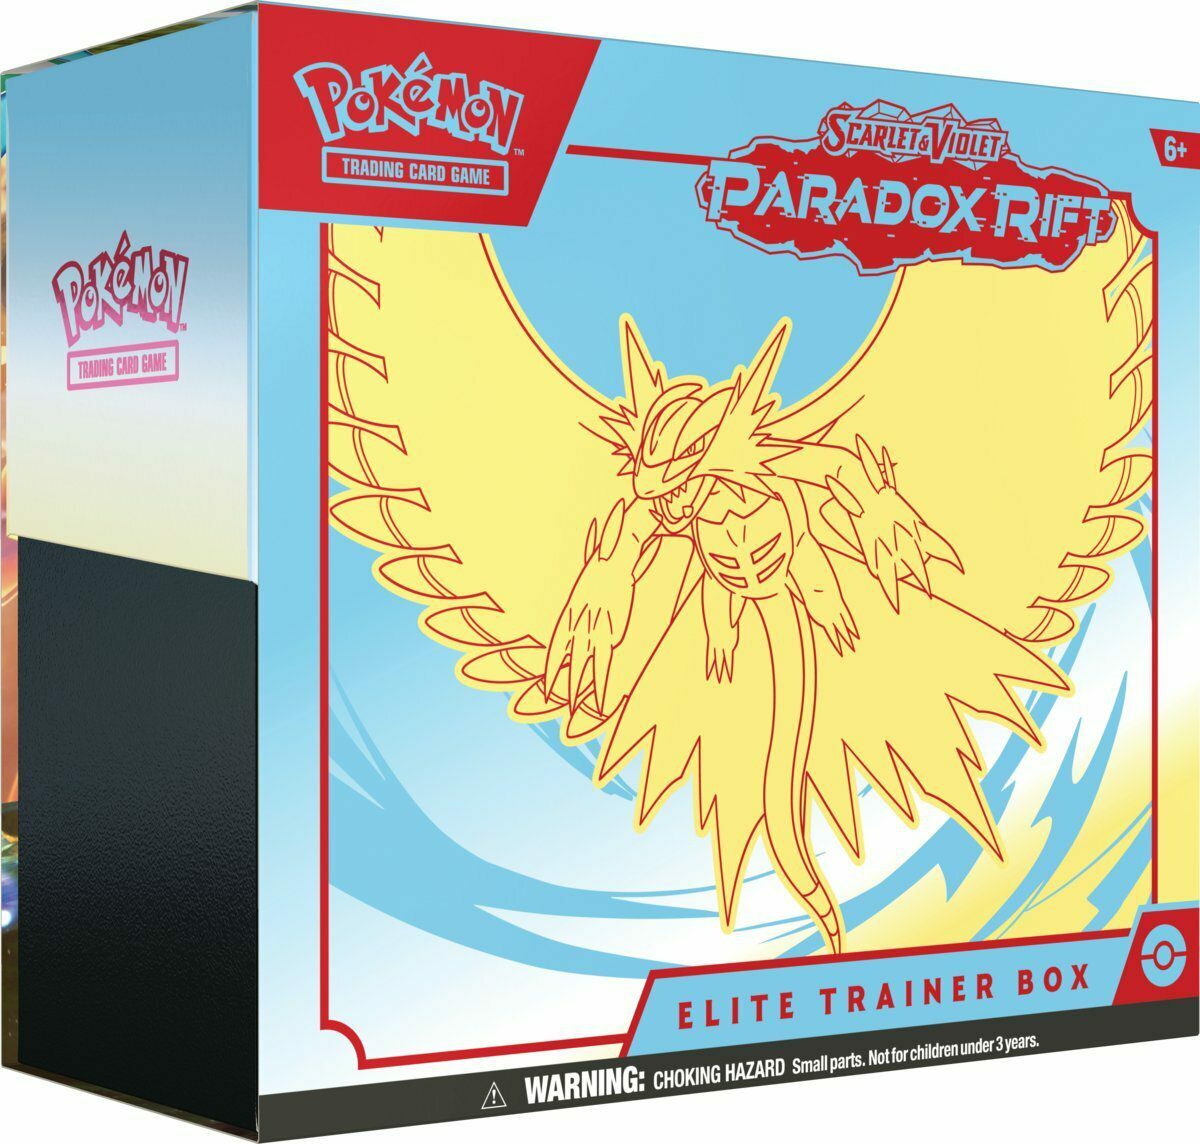 Pokémon TCG: SV04 Paradox Rift - Elite Trainer Box